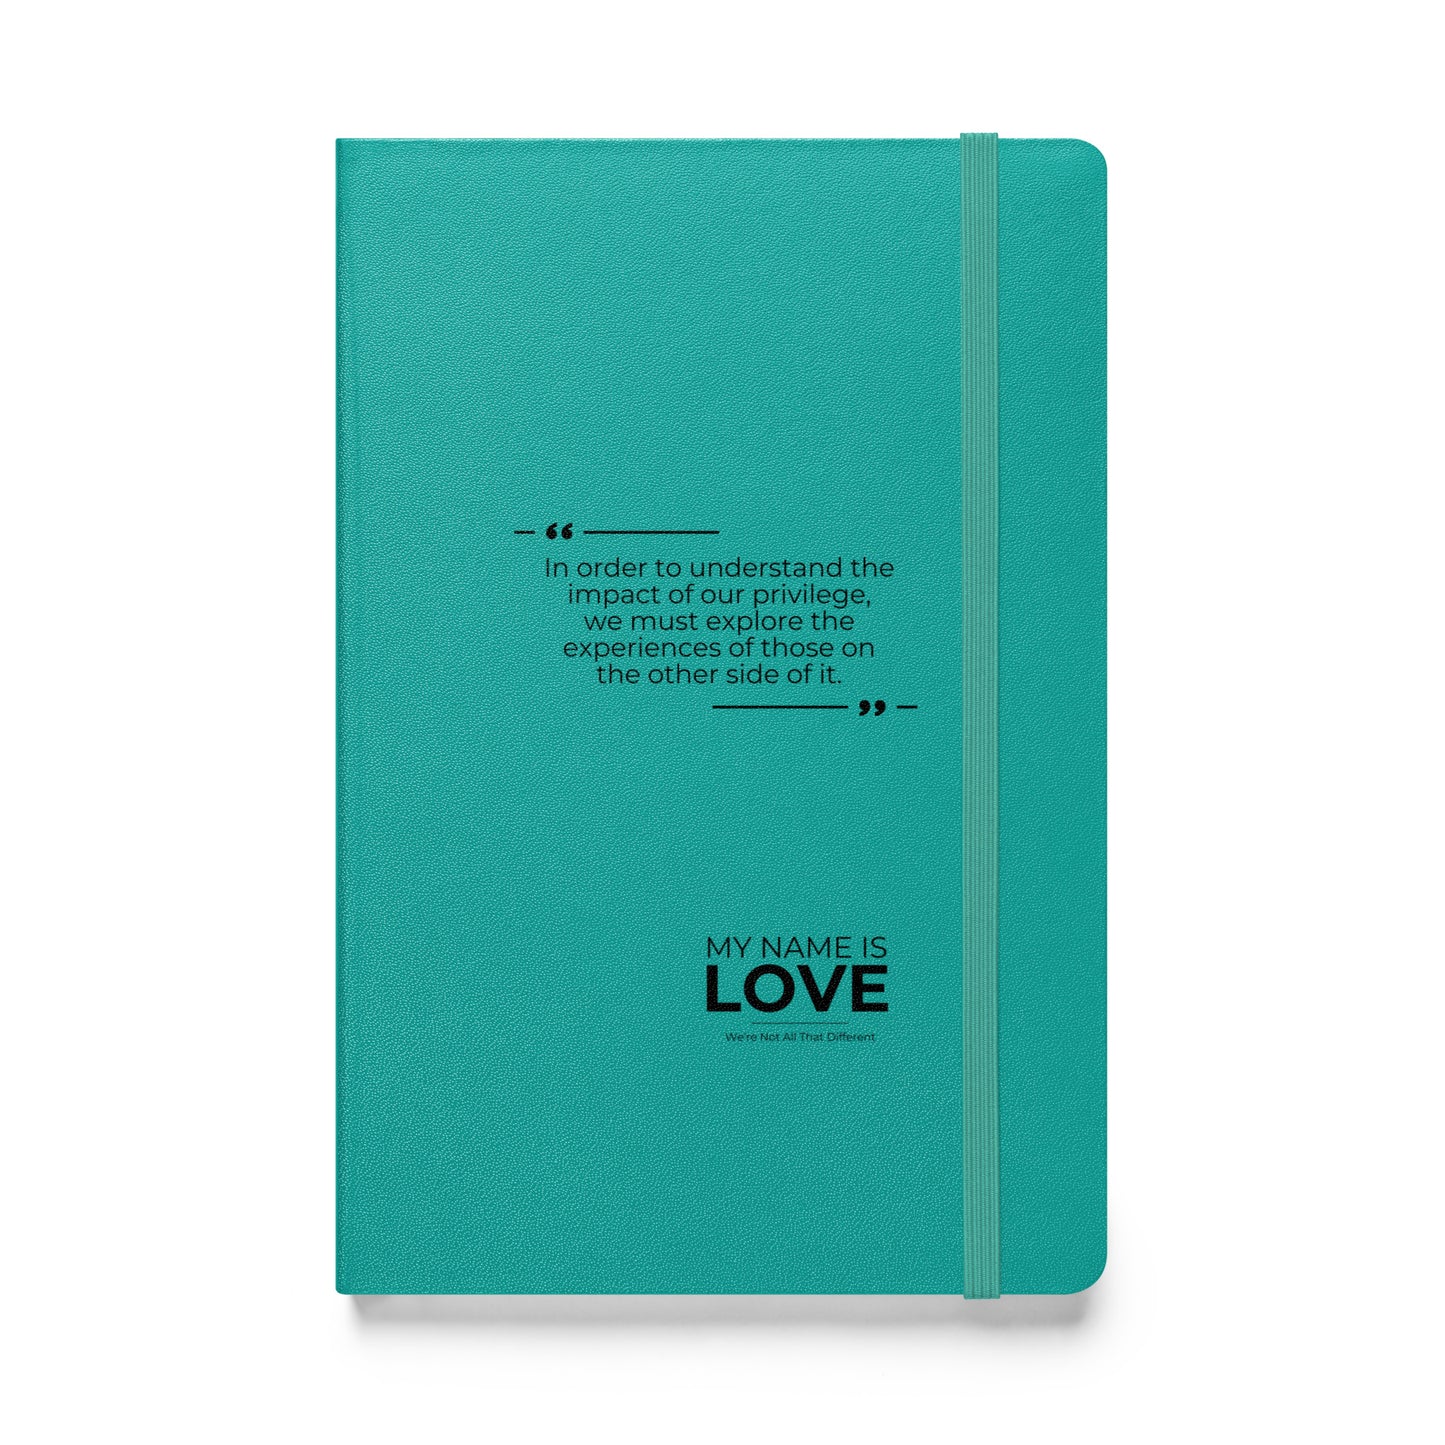 PriviledgeQuote:Hardcover bound notebook